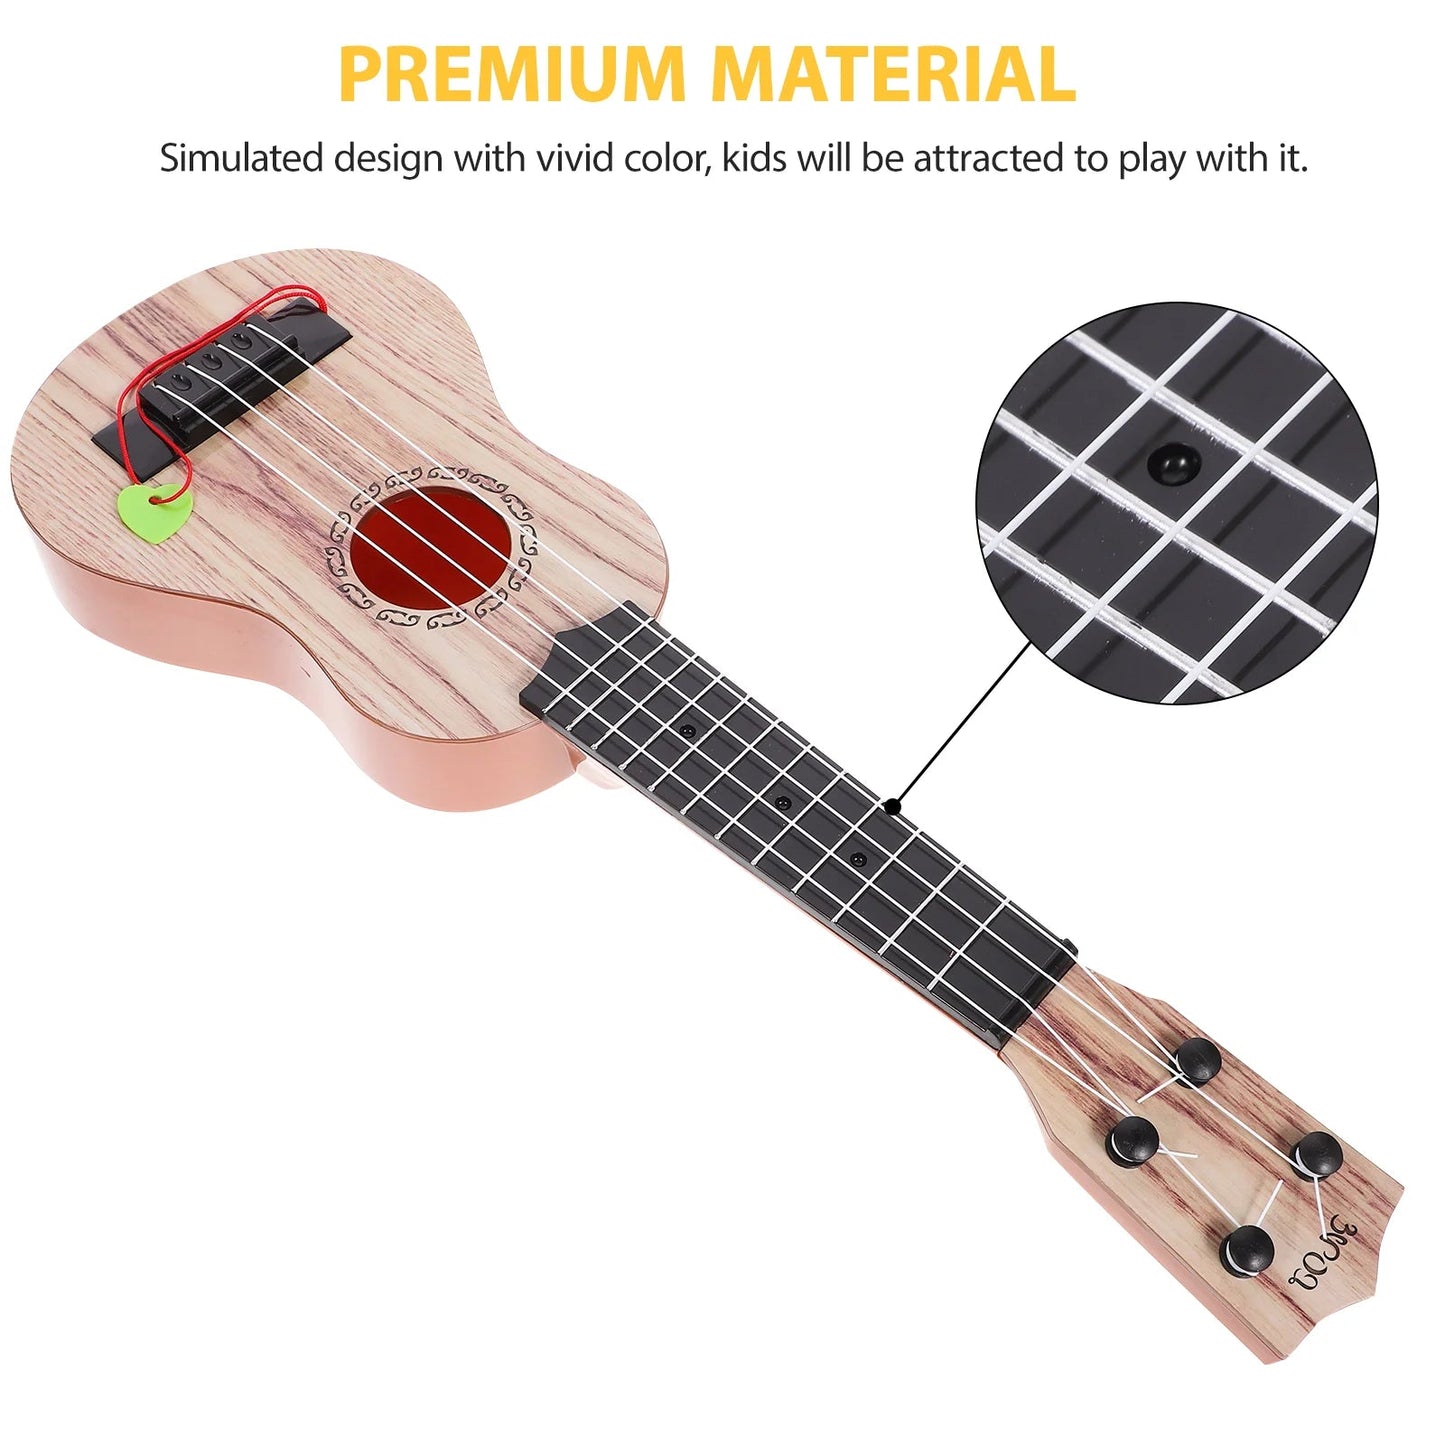 Guitar Toy Musical Instruments Electric Simulation Ukulele Kids Wood